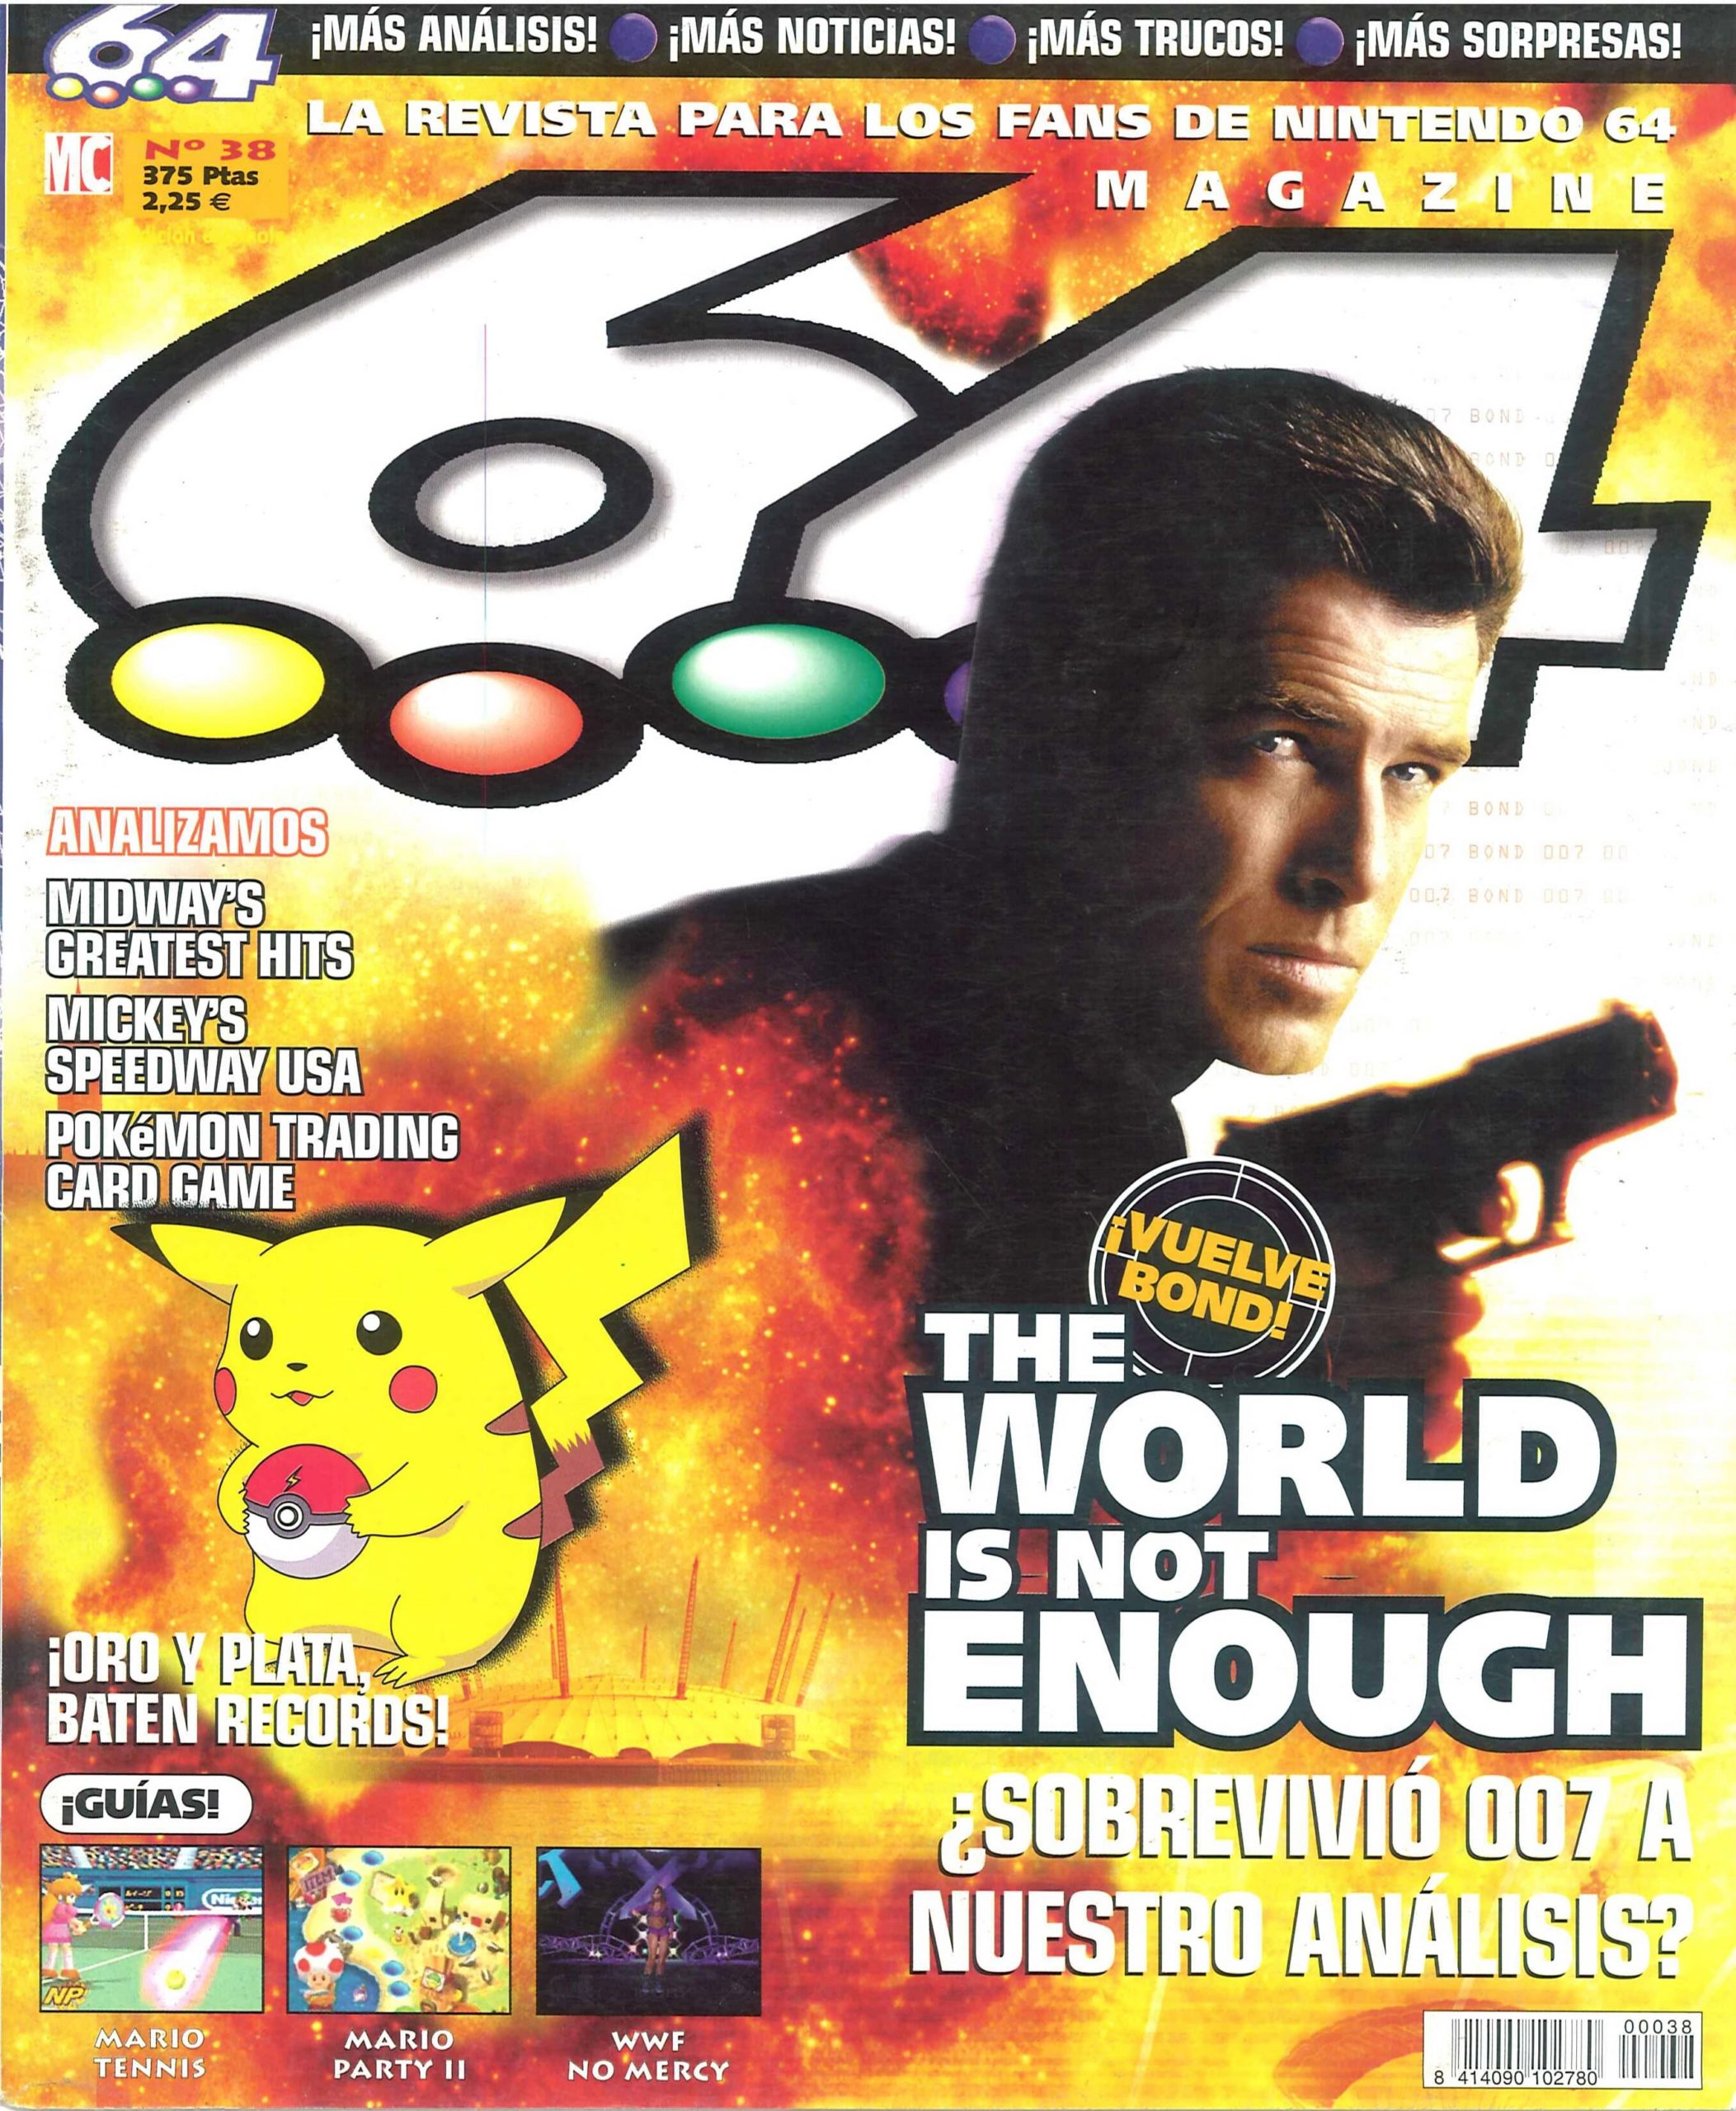 Juegos 2001 02 28 Magazine 64 No38 001 TWINE scaled